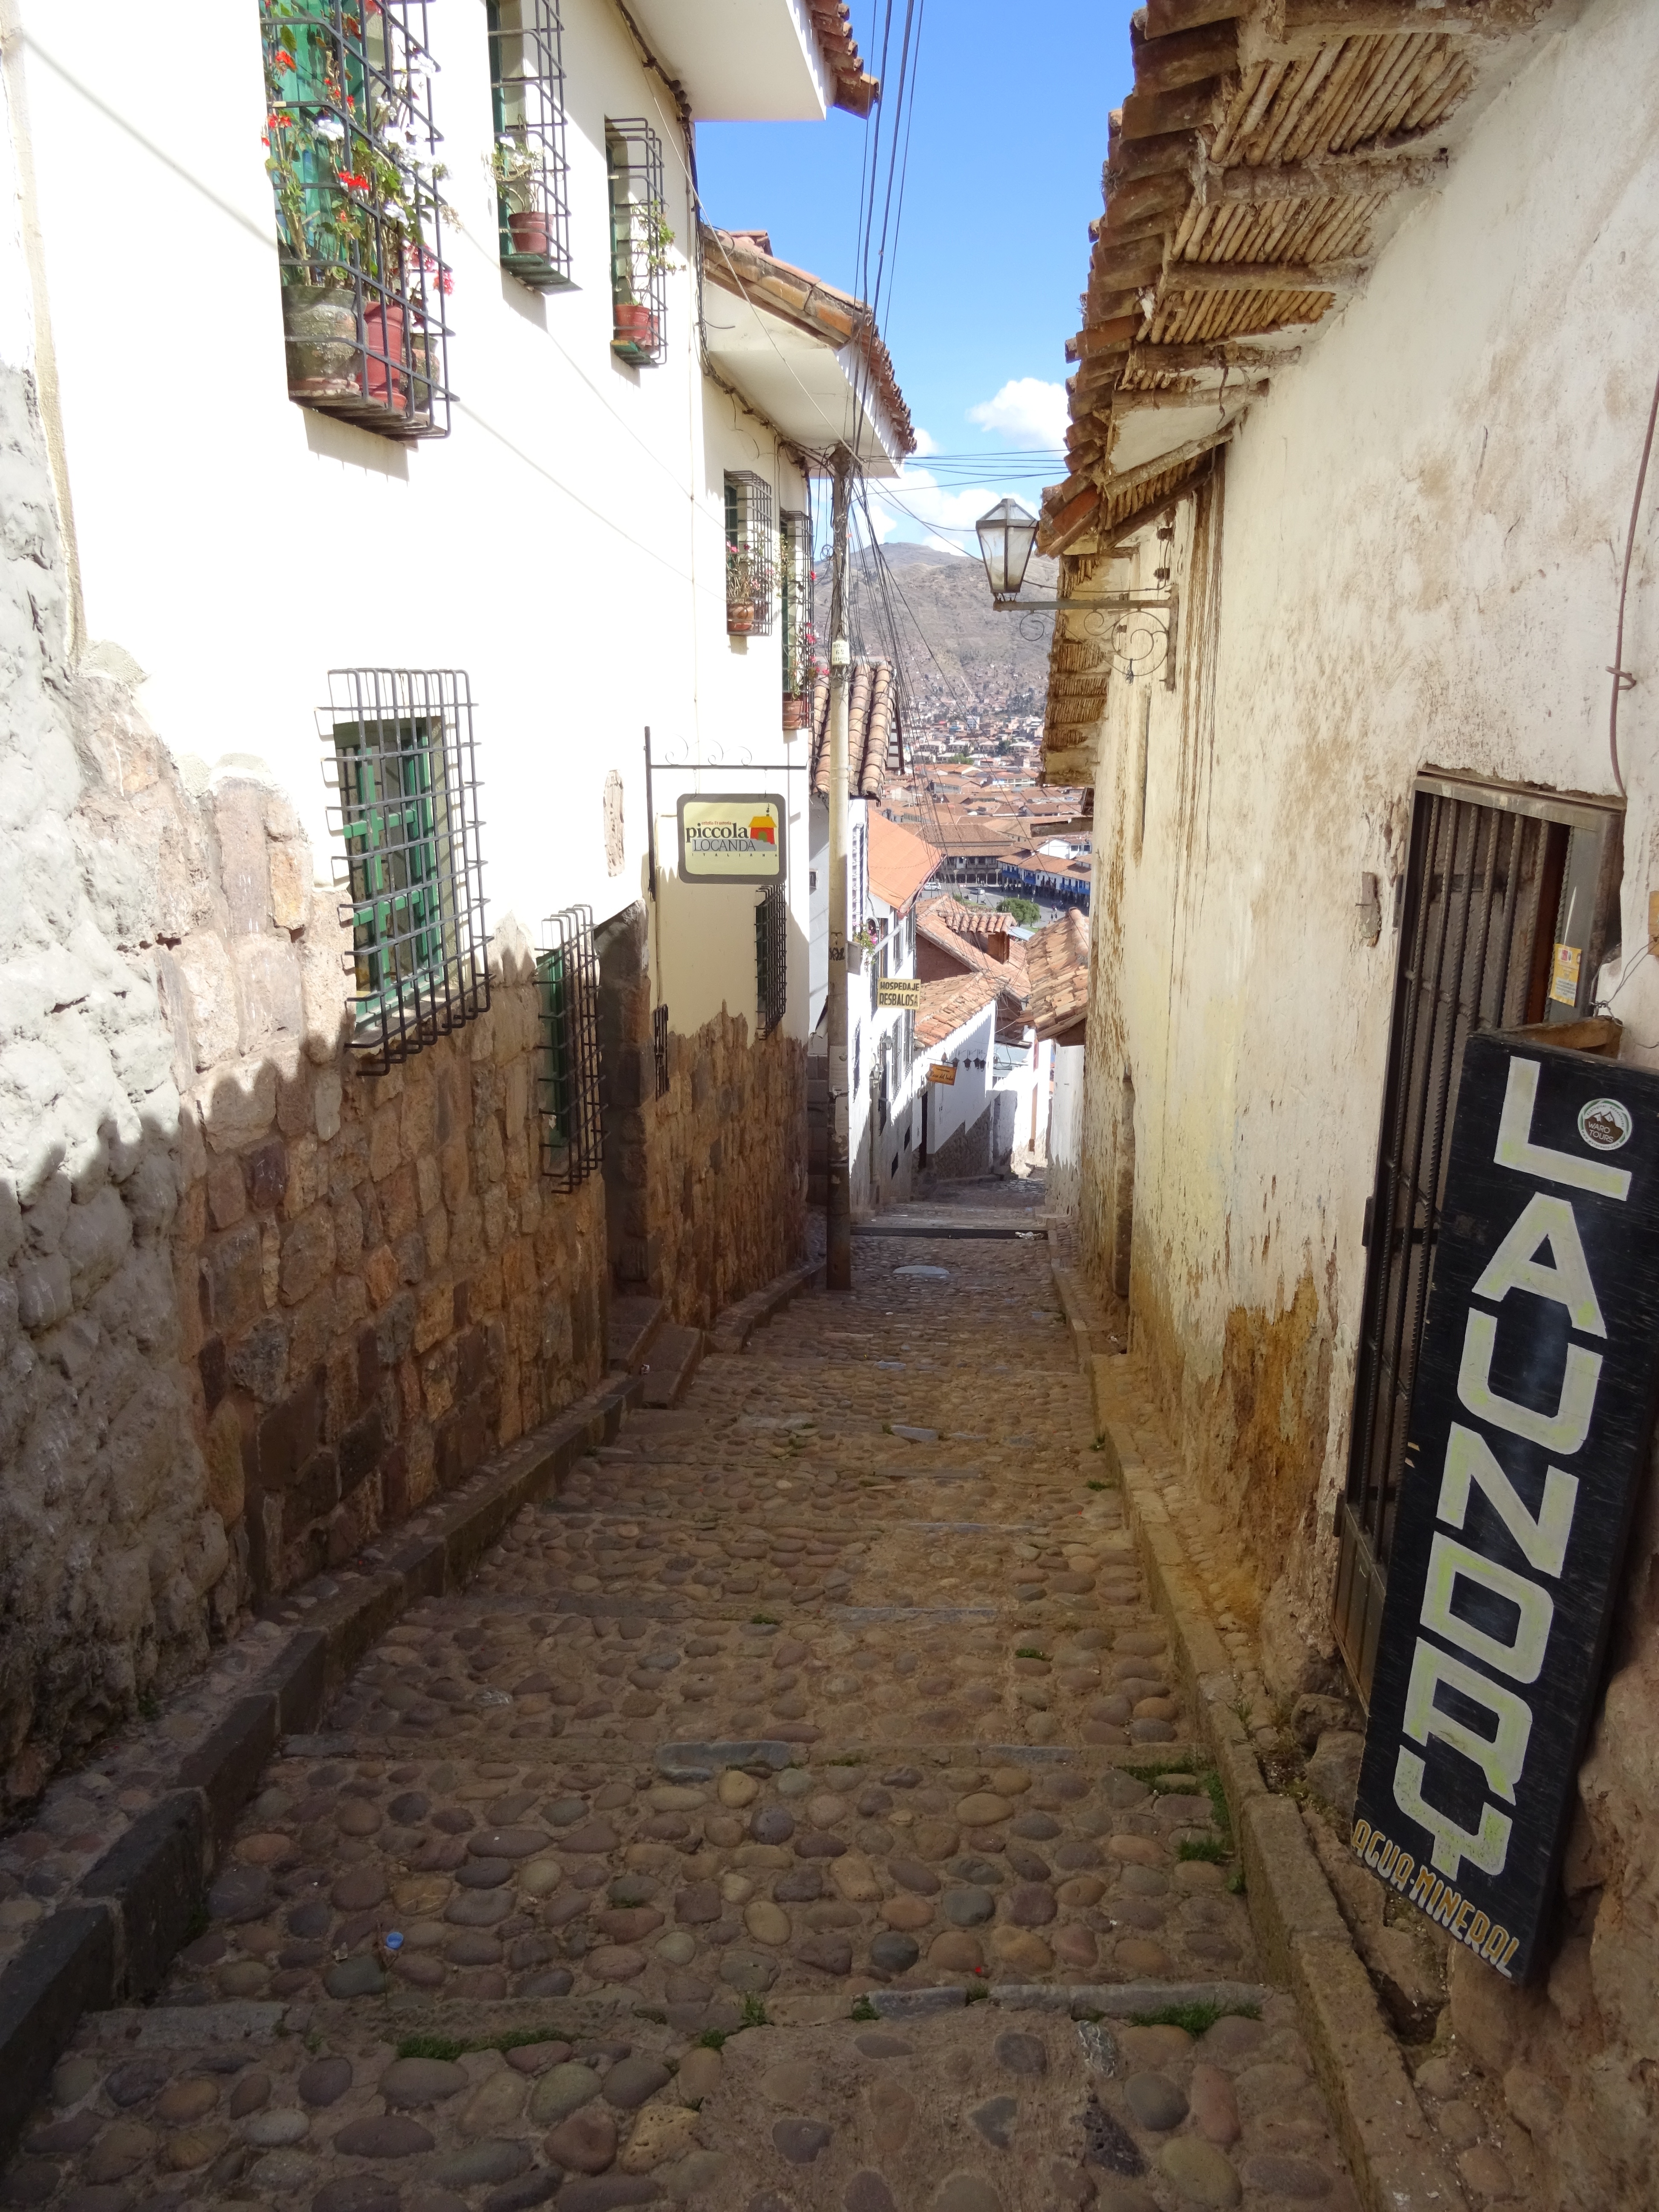 A street in San blas, Cusco